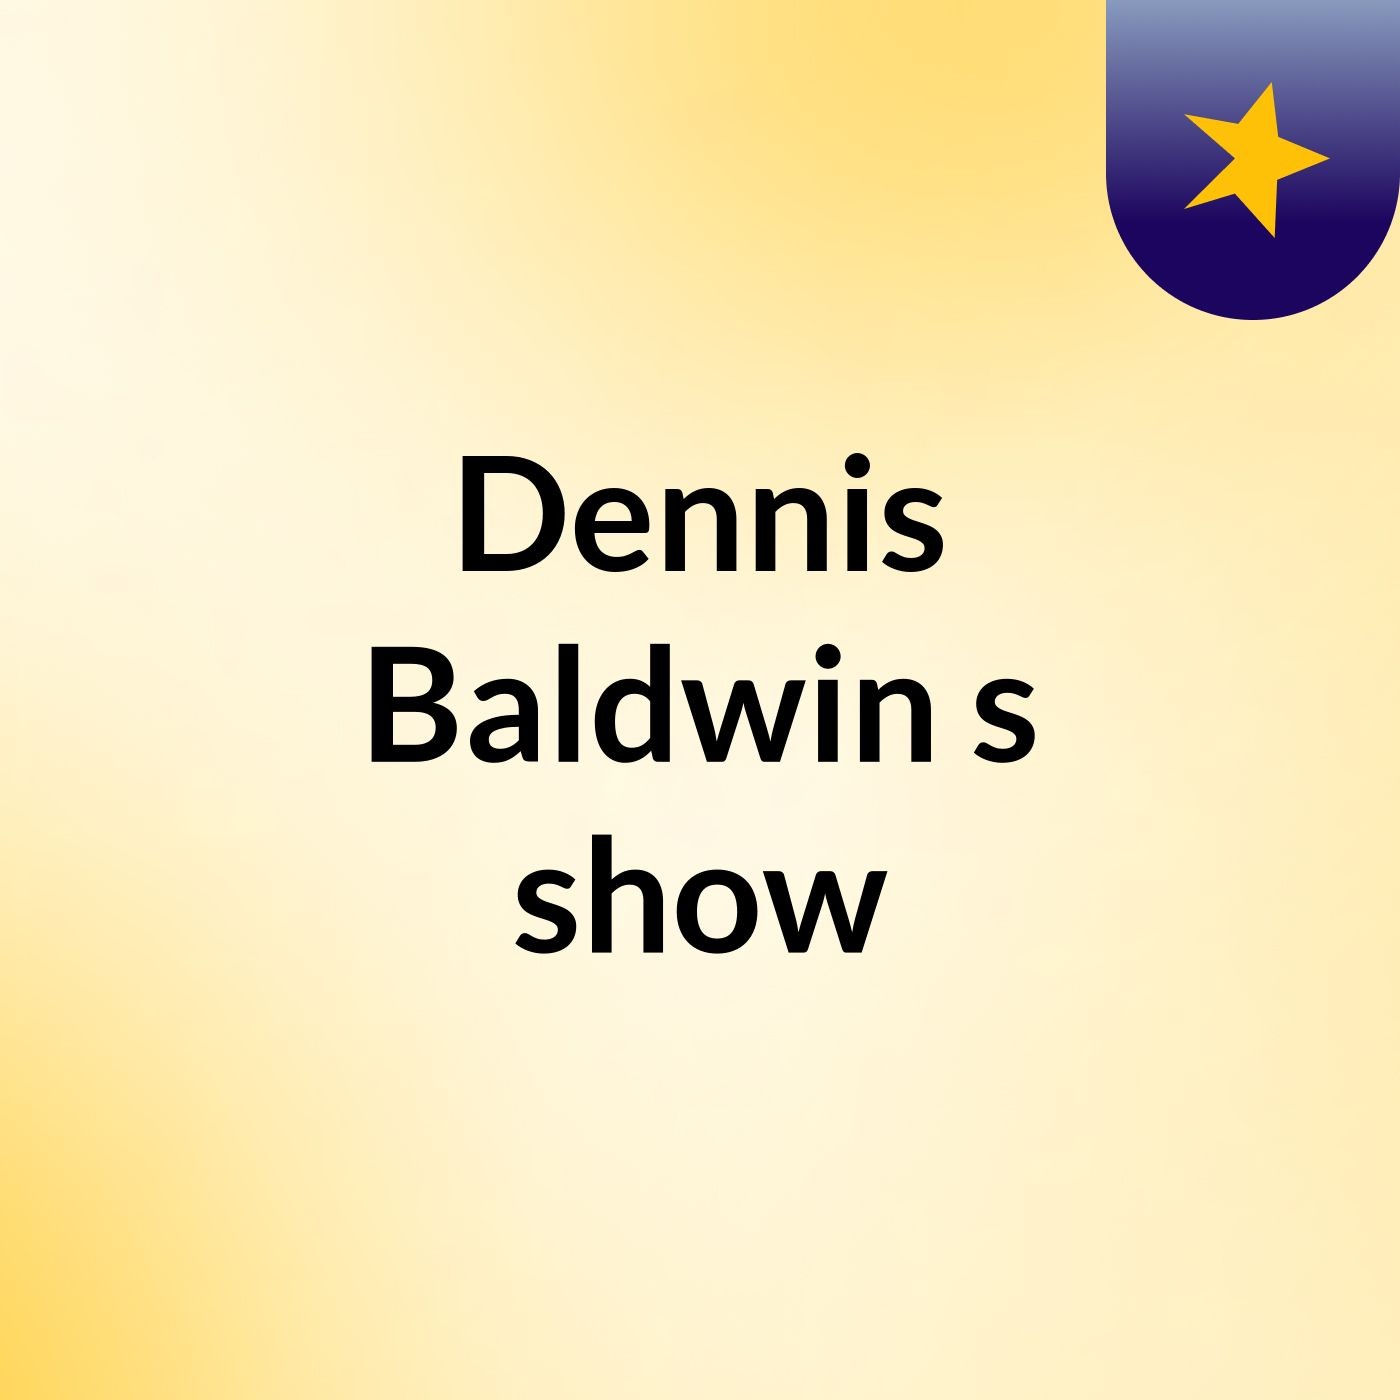 Dennis Baldwin's show